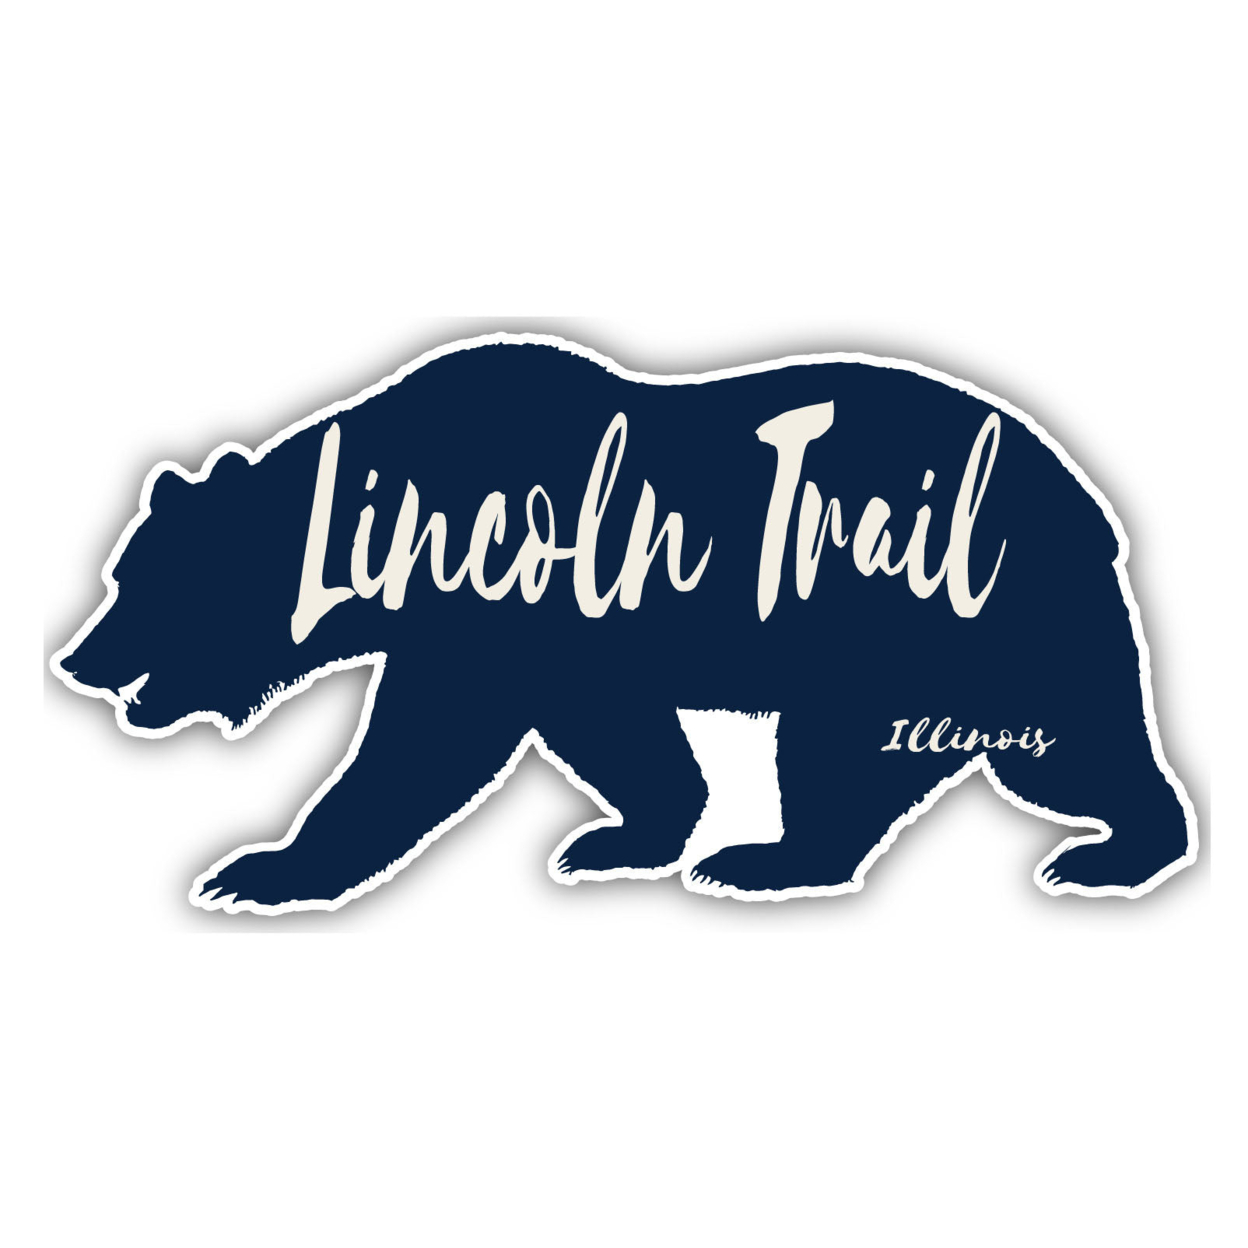 Lincoln Trail Illinois Souvenir Decorative Stickers (Choose Theme And Size) - 4-Inch, Bear